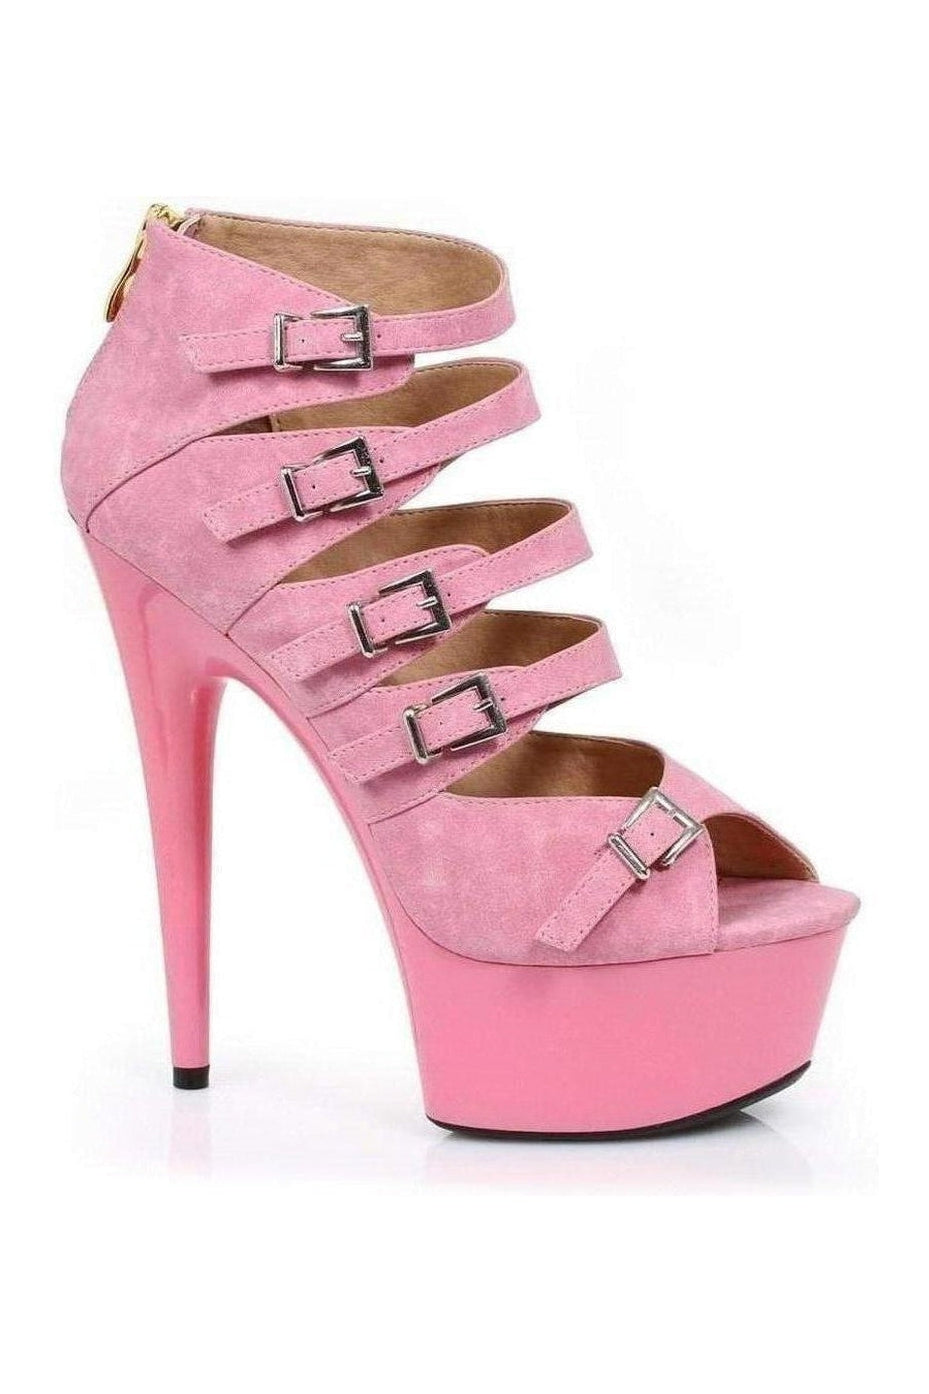 Ellie Shoes Pink Ankle Boots Platform Stripper Shoes | Buy at Sexyshoes.com